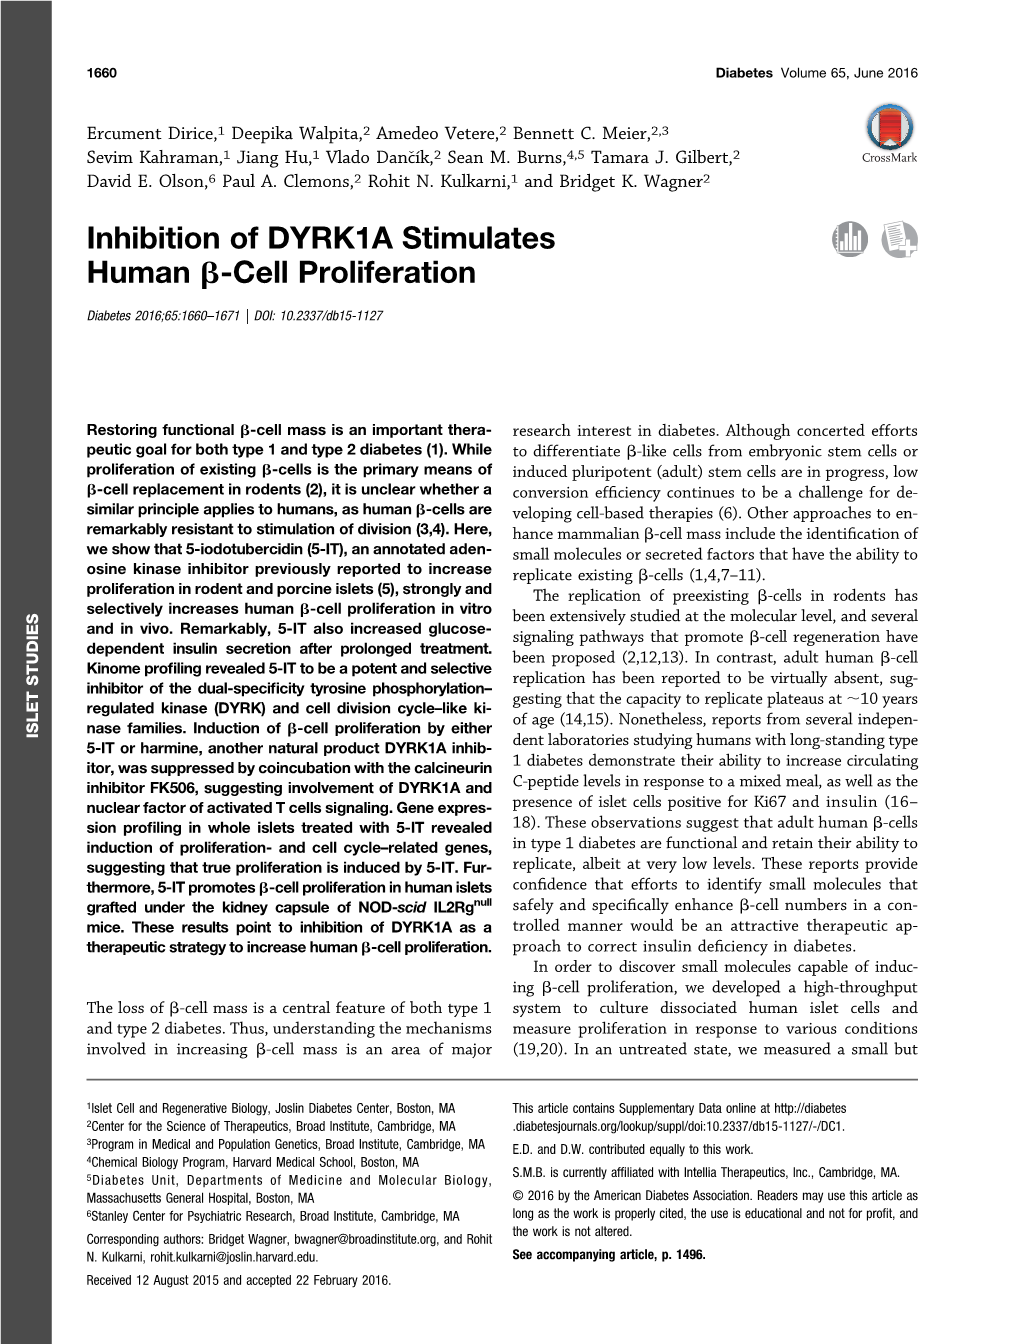 Inhibition of DYRK1A Stimulates Human Β-Cell Proliferation